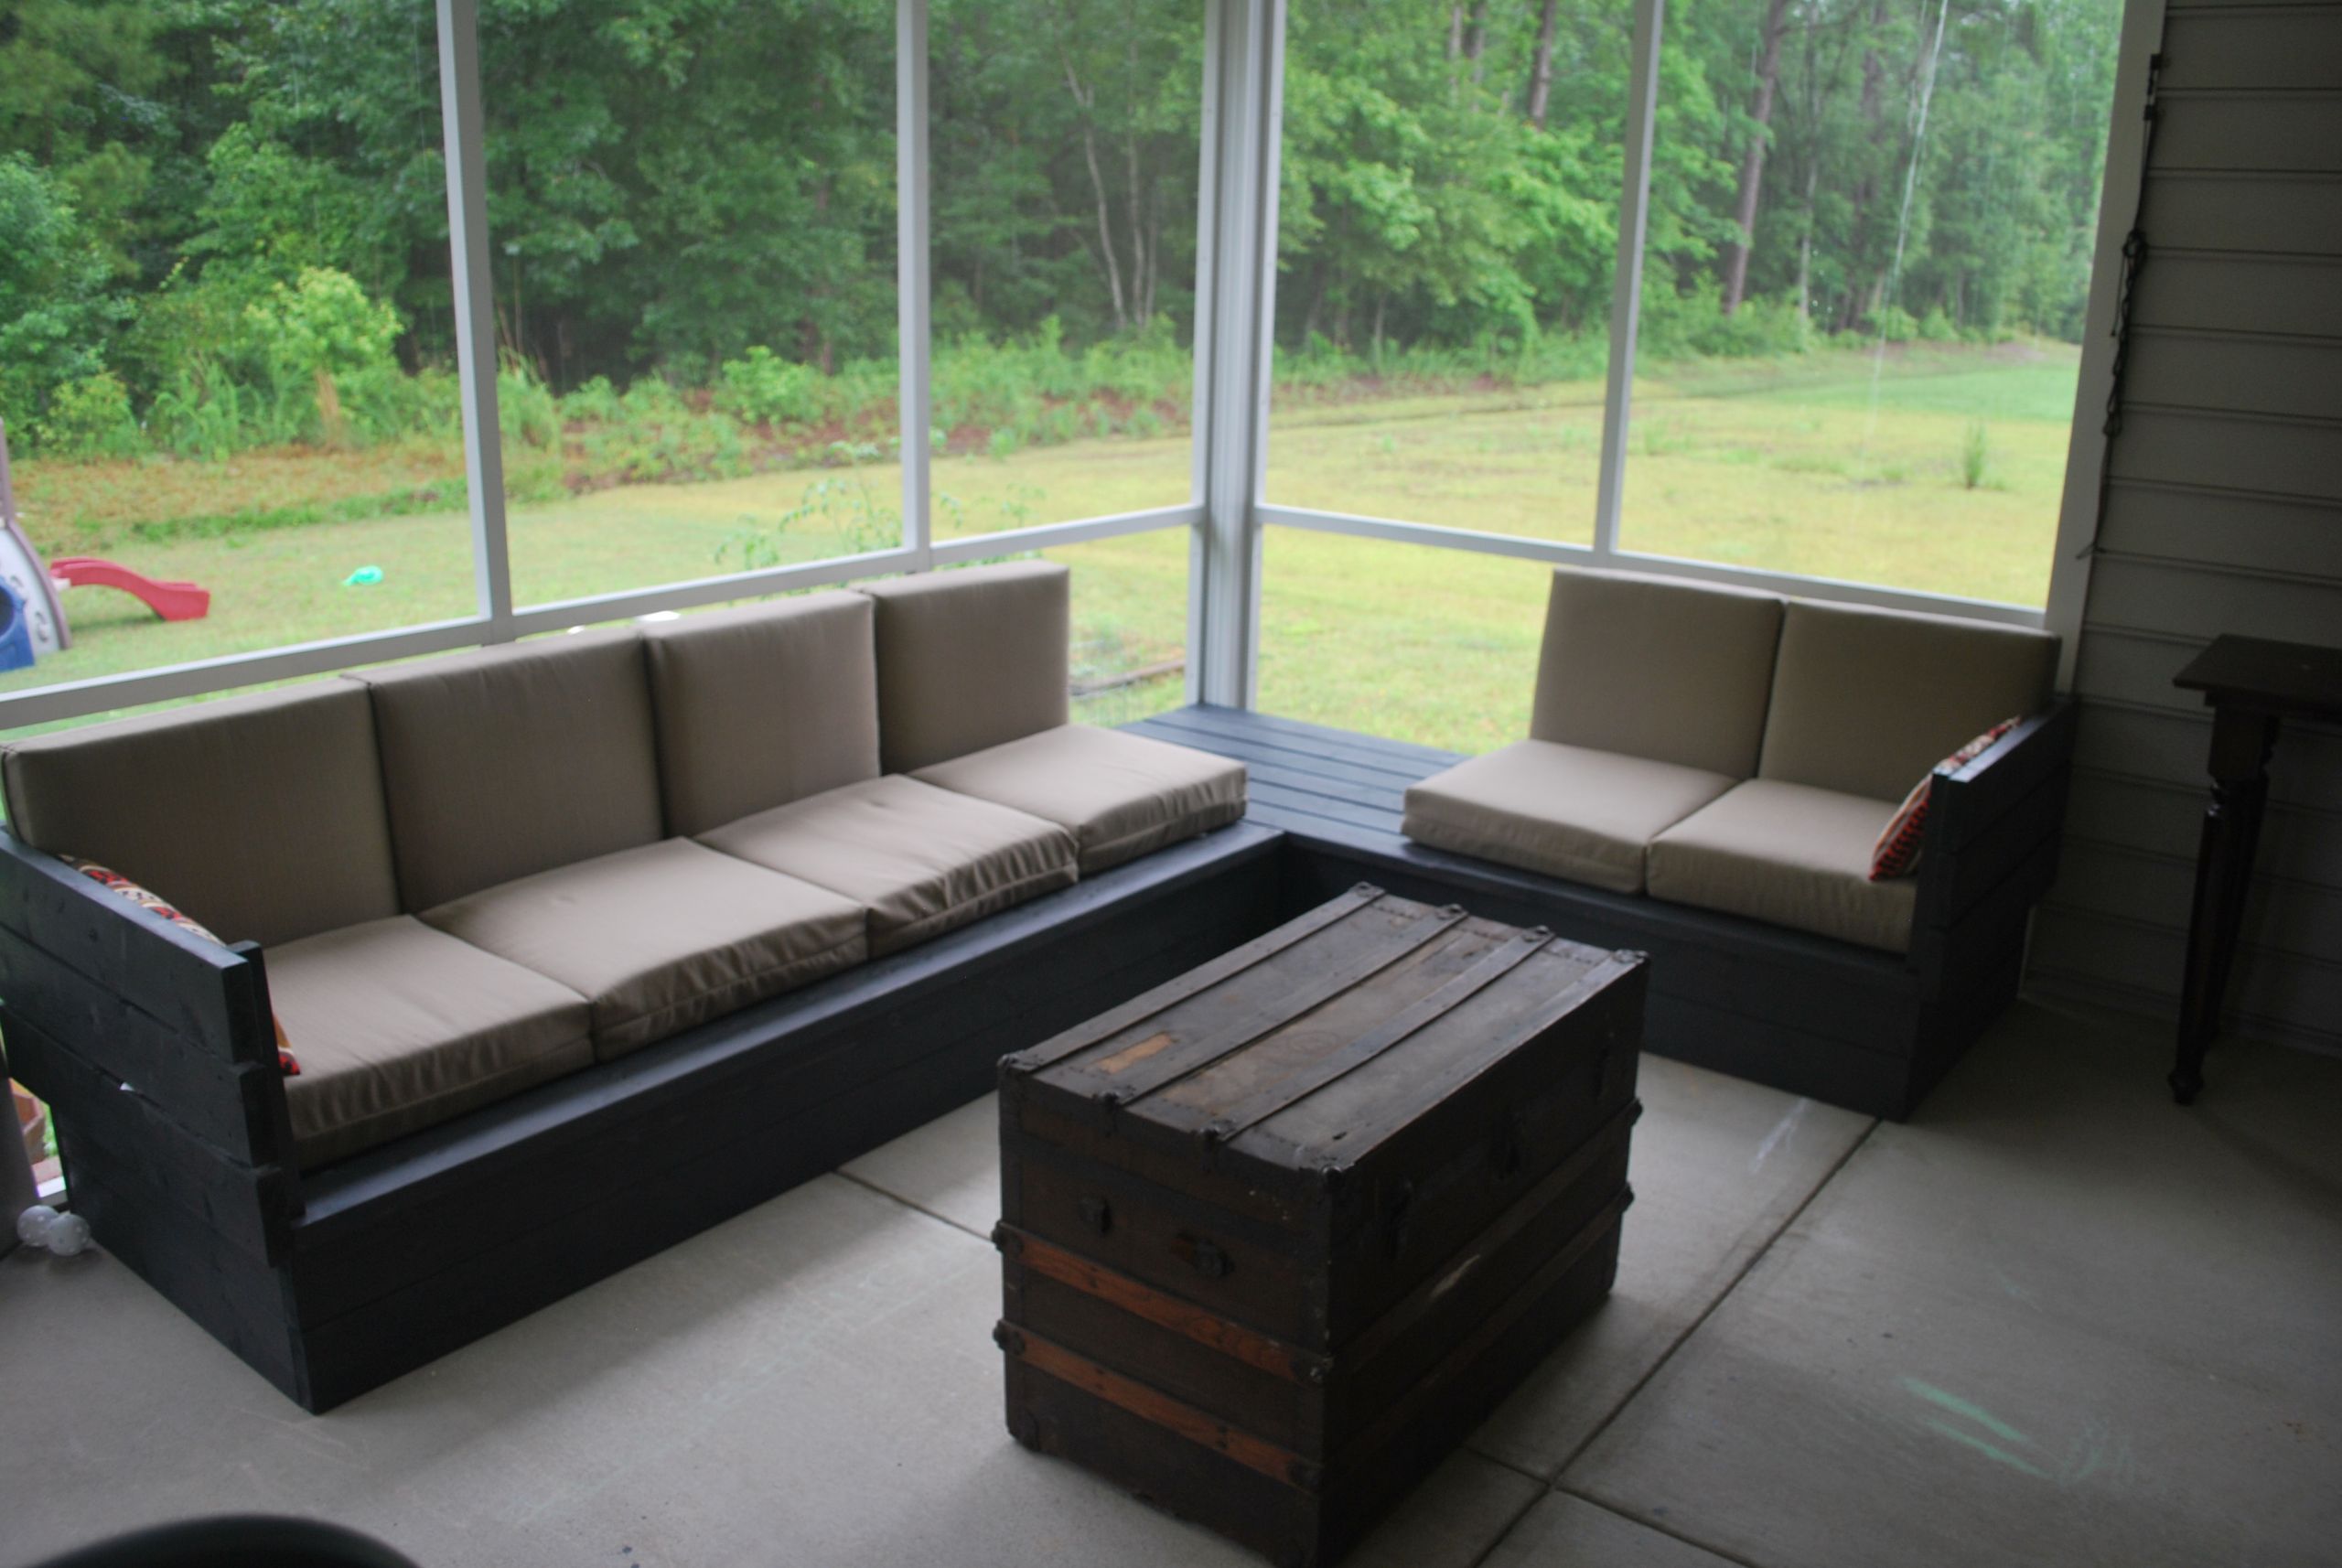 DIY Outdoor Sectional Sofa
 Ana White